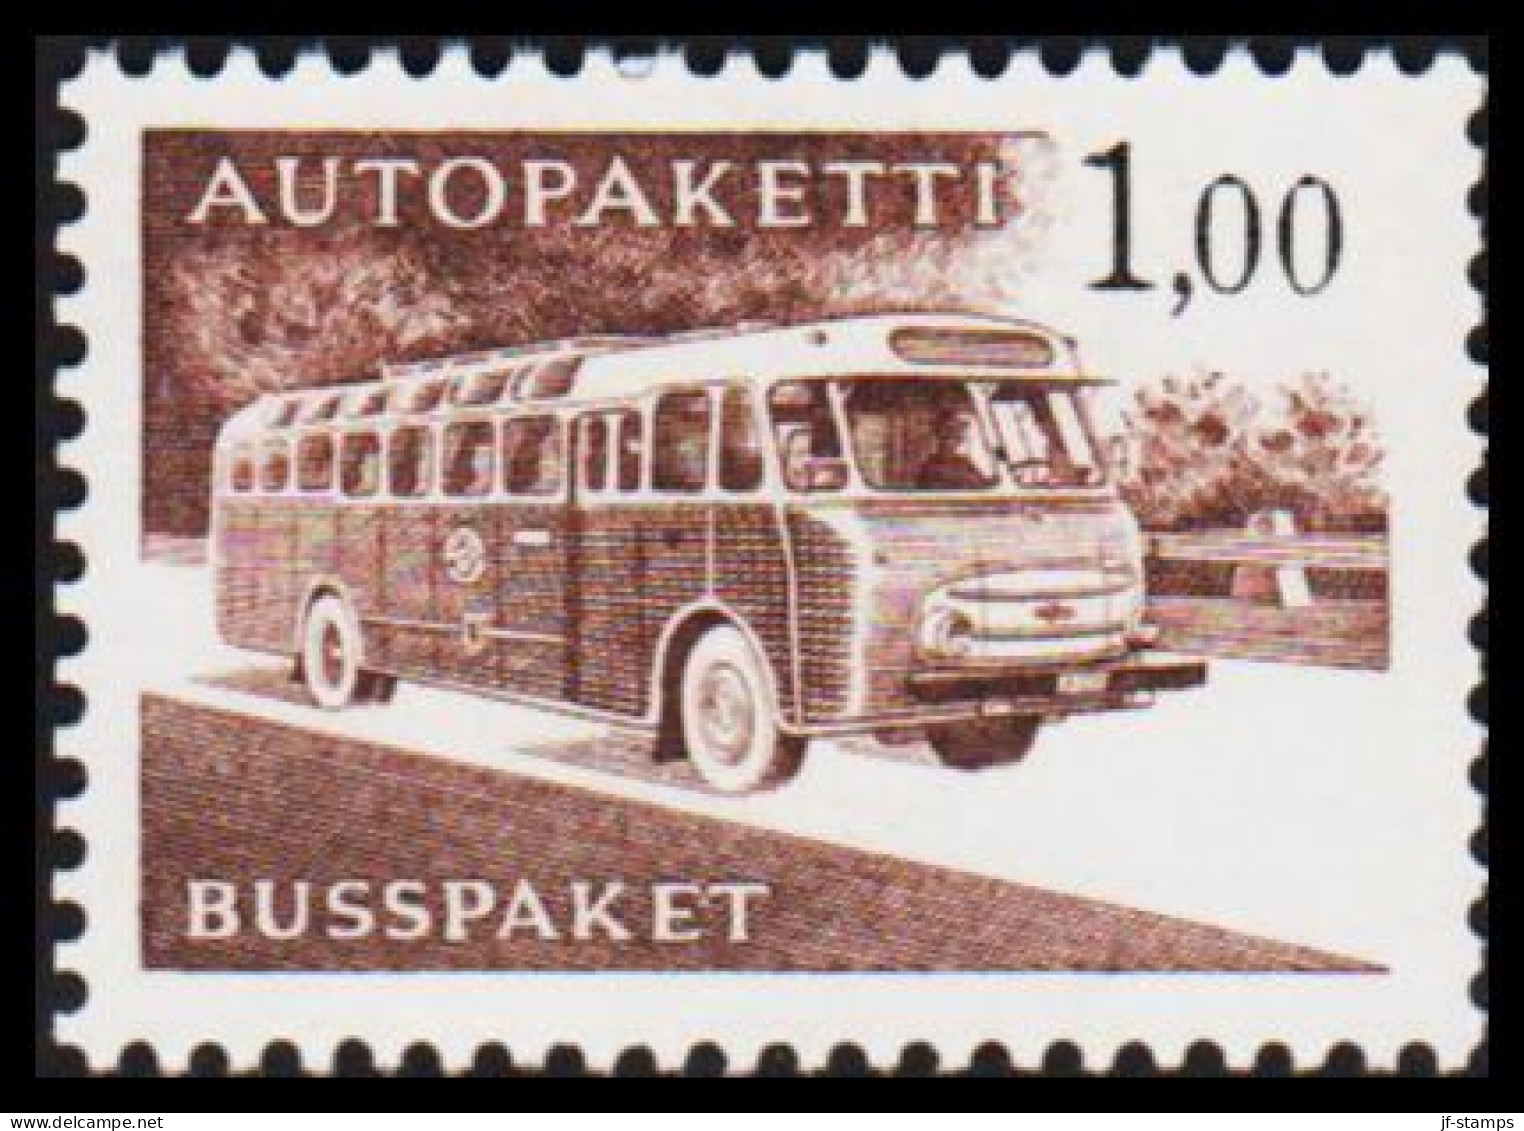 1963-1980. FINLAND. Mail Bus. 1,00 Mk. AUTOPAKETTI - BUSSPAKET Never Hinged. Lumogen Paper... (Michel AP 13y) - JF535633 - Postbuspakete